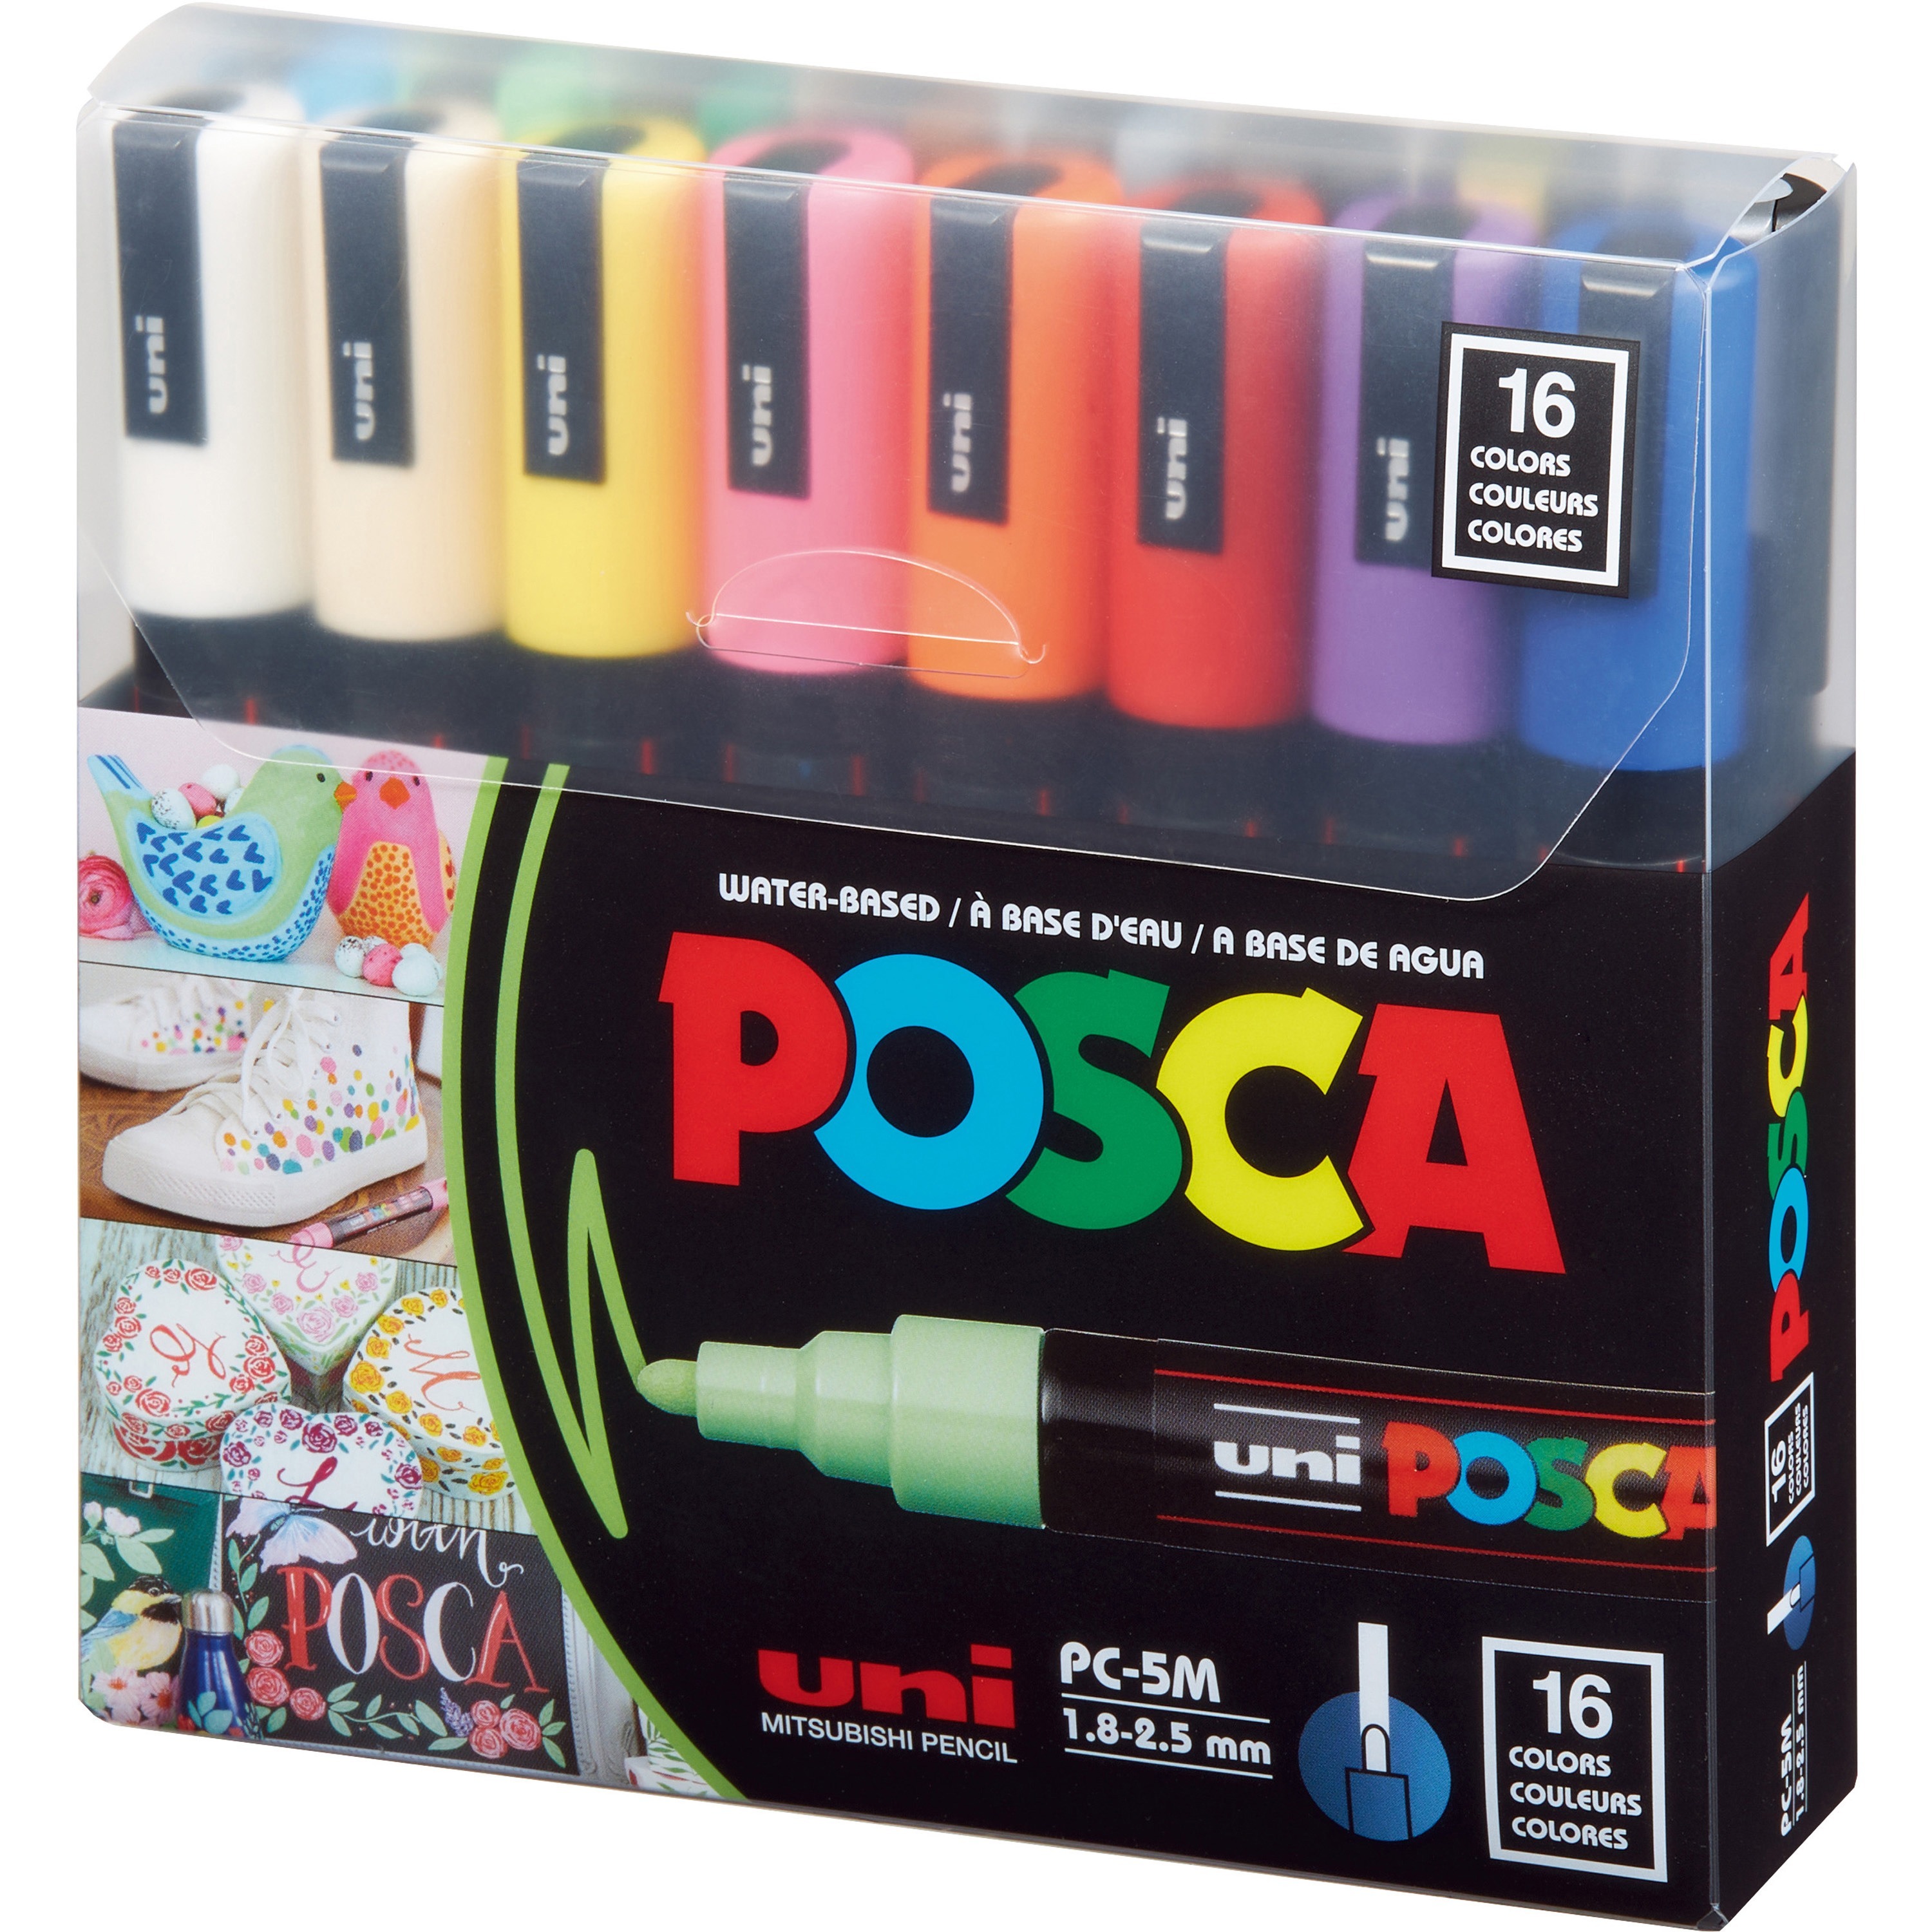 Posca Marker 3M in Orange, Posca Pens for Art Supplies, School Supplies,  Rock Art, Fabric Paint, Fabric Markers, Paint Pen, Art Markers, Posca Paint